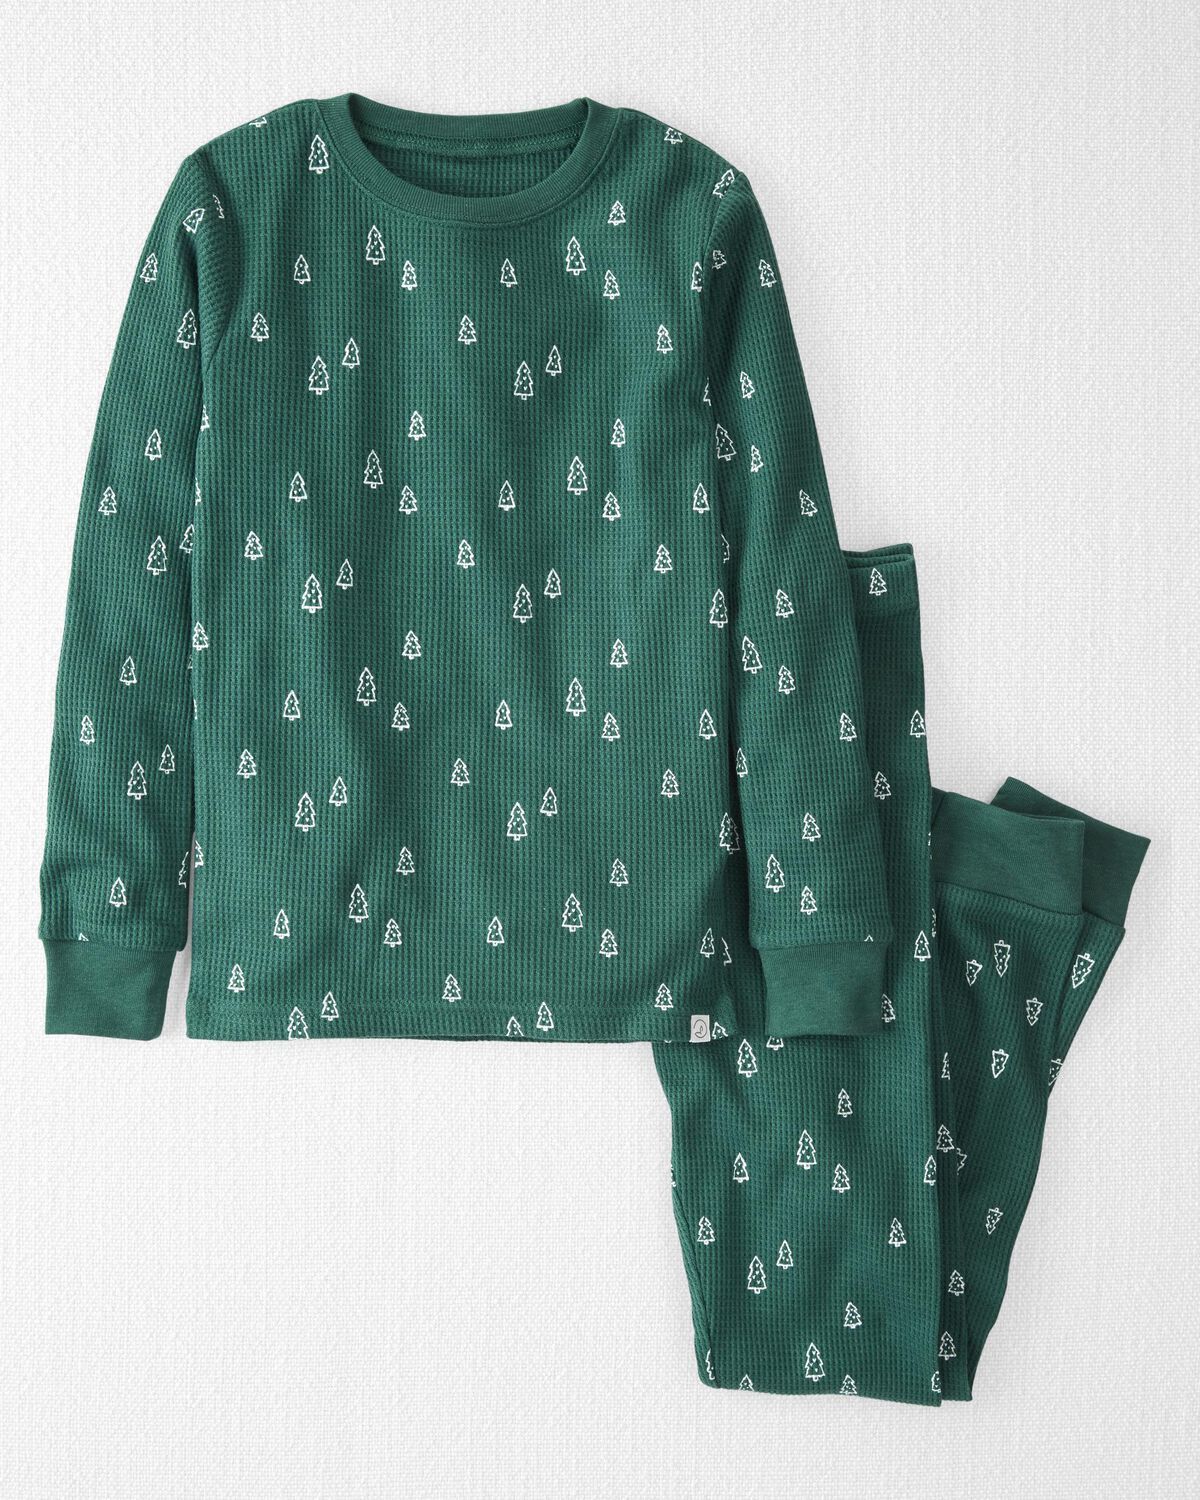 Tree Print Kid Waffle Knit Evergreen Trees Pajamas Set
 | carters.com | Carter's